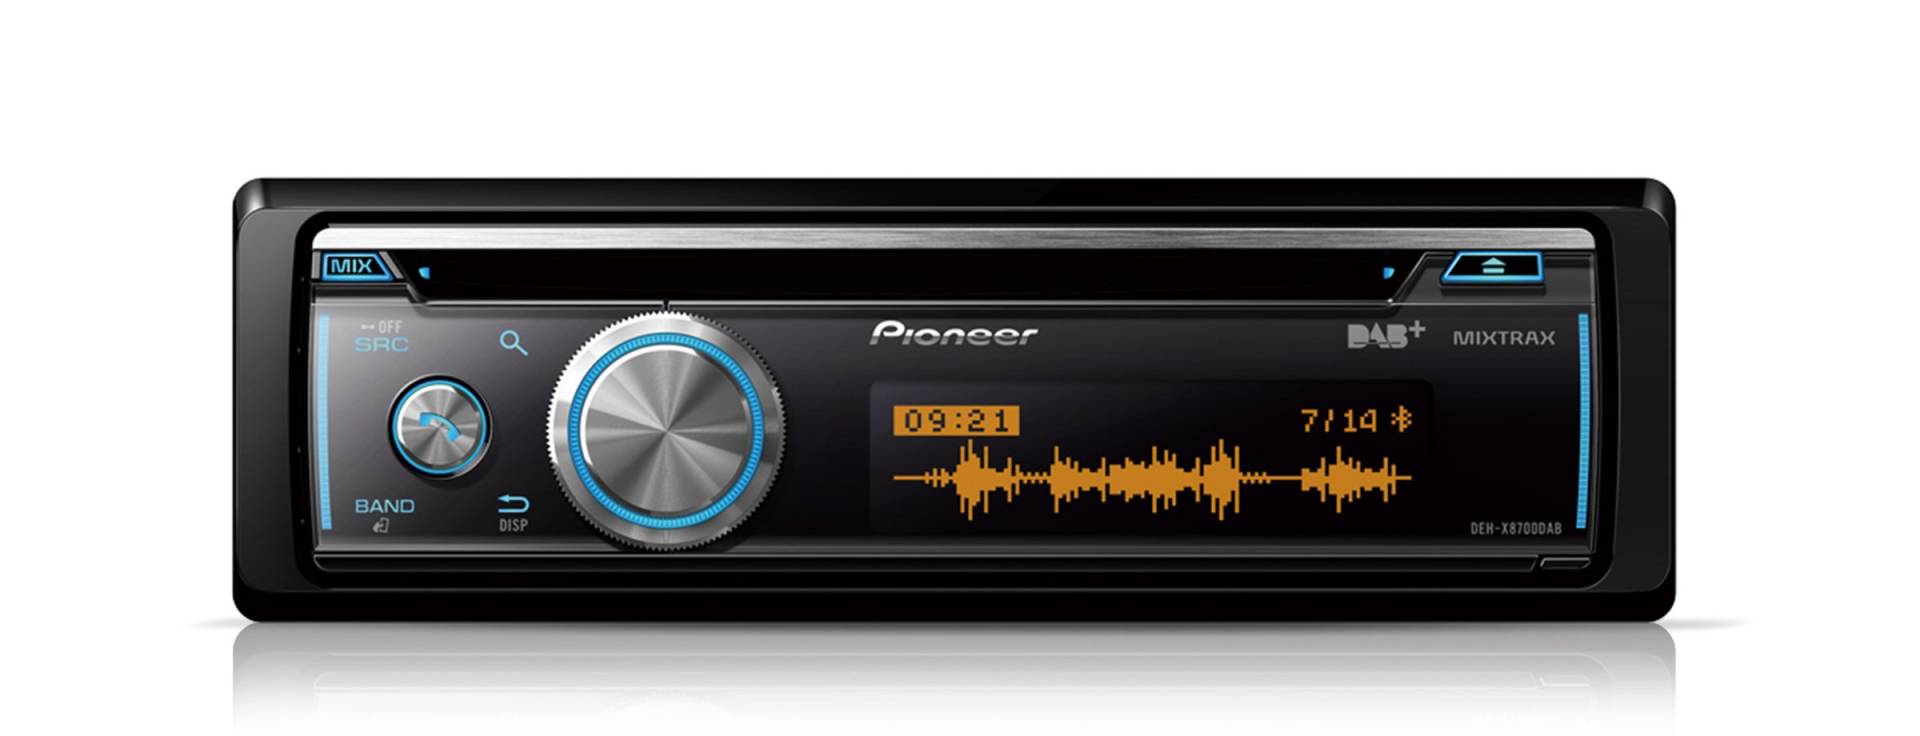 Pioneer DEH-X8700DAB-AN, 1-DIN-Autoradio, CD-Tuner mit FM und DAB+, Bluetooth, MP3, USB und AUX-Eingang, RGB – Beleuchtung, Bluetooth, Smart Sync App, 5-Band Equalizer, Spotify, inkl. DAB-Antenne von Pioneer